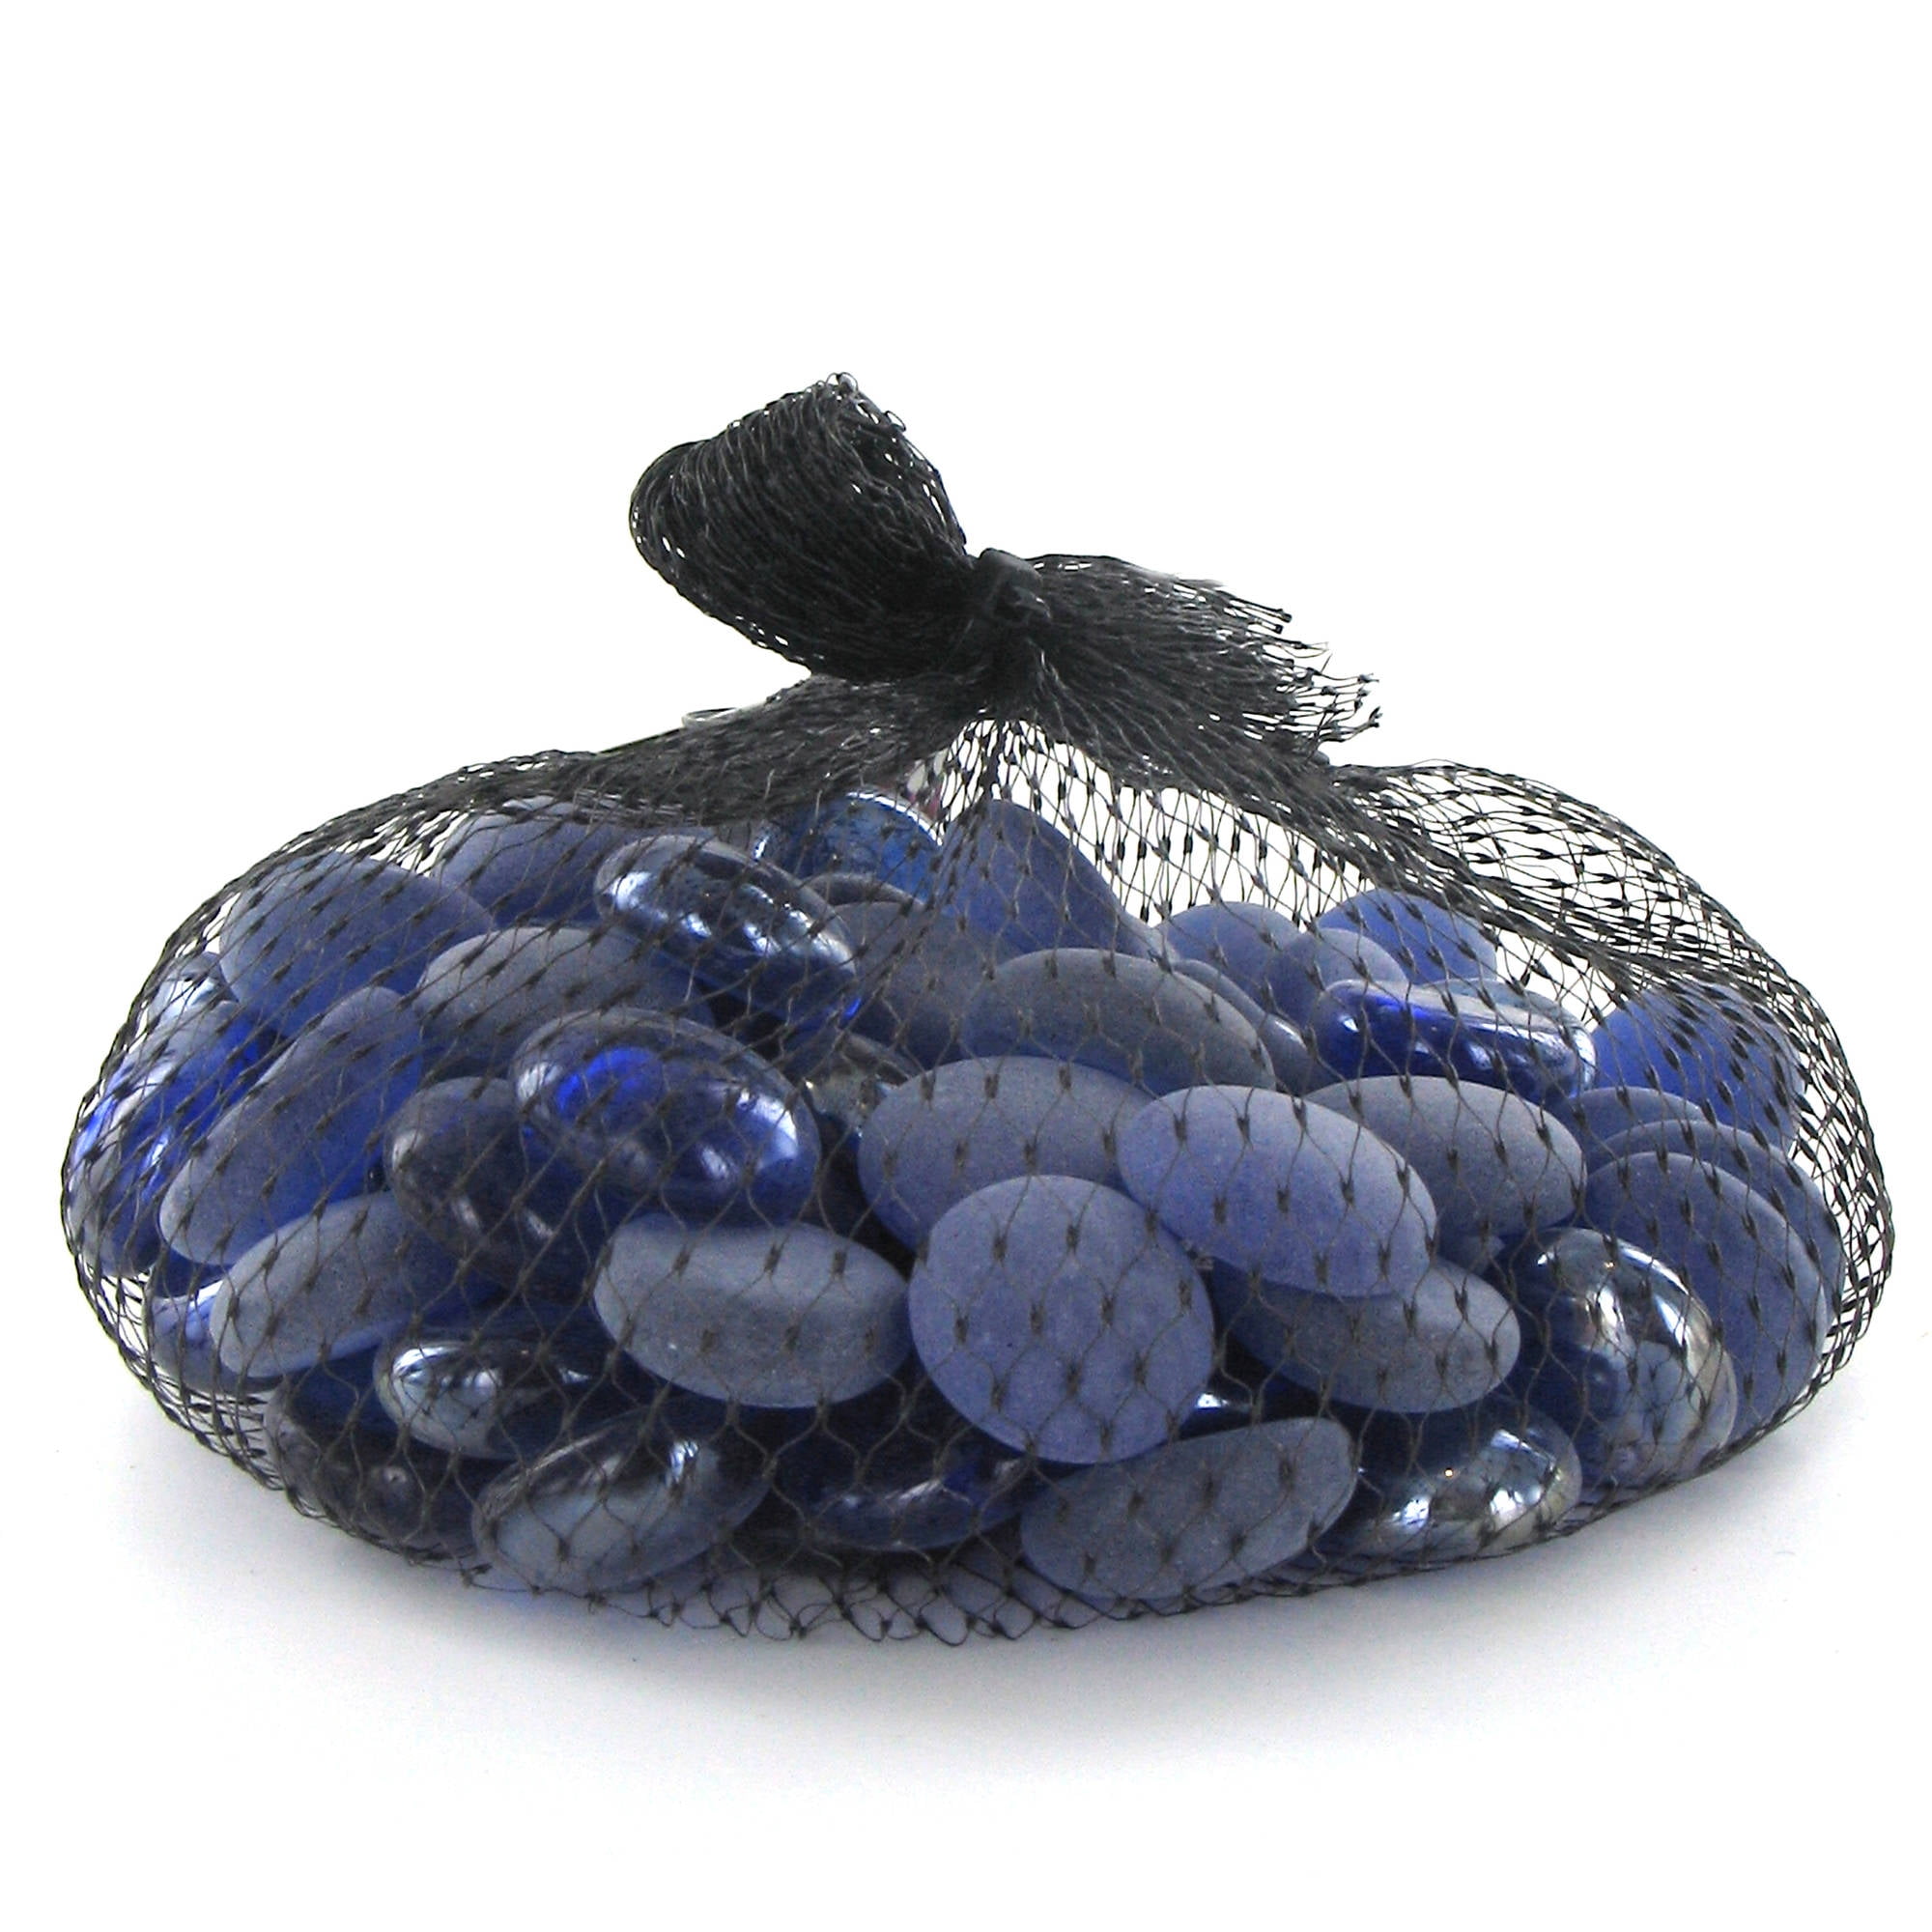 Akasha Decorative Cobalt Blue Mixed Glass Gems, 10 oz. Bag